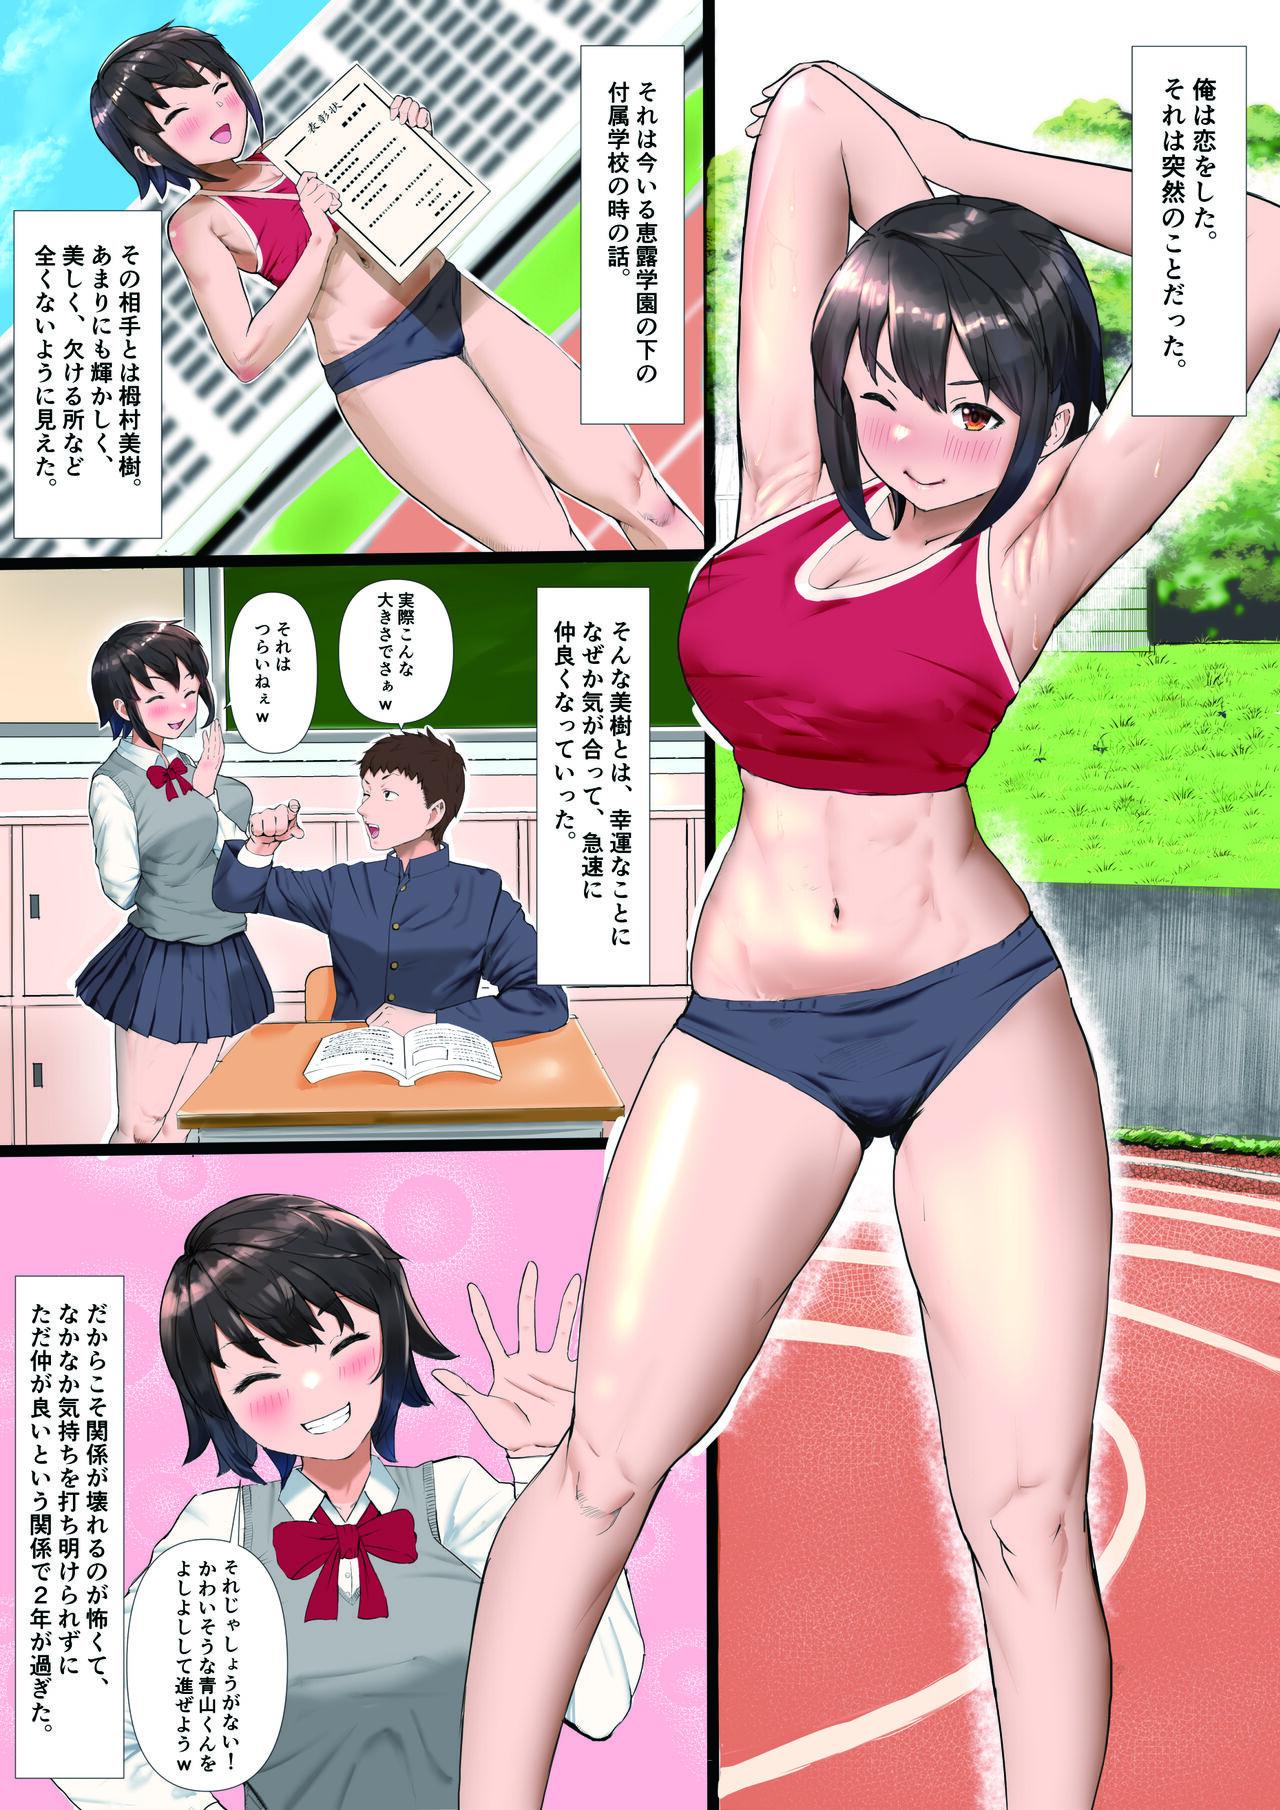 A Girlfriend From The Track And Field Club Turned Into A Senior's Woman-Rikujoubu no Kanojo ga, Senpai no Onna ni Natteita Nante. 44